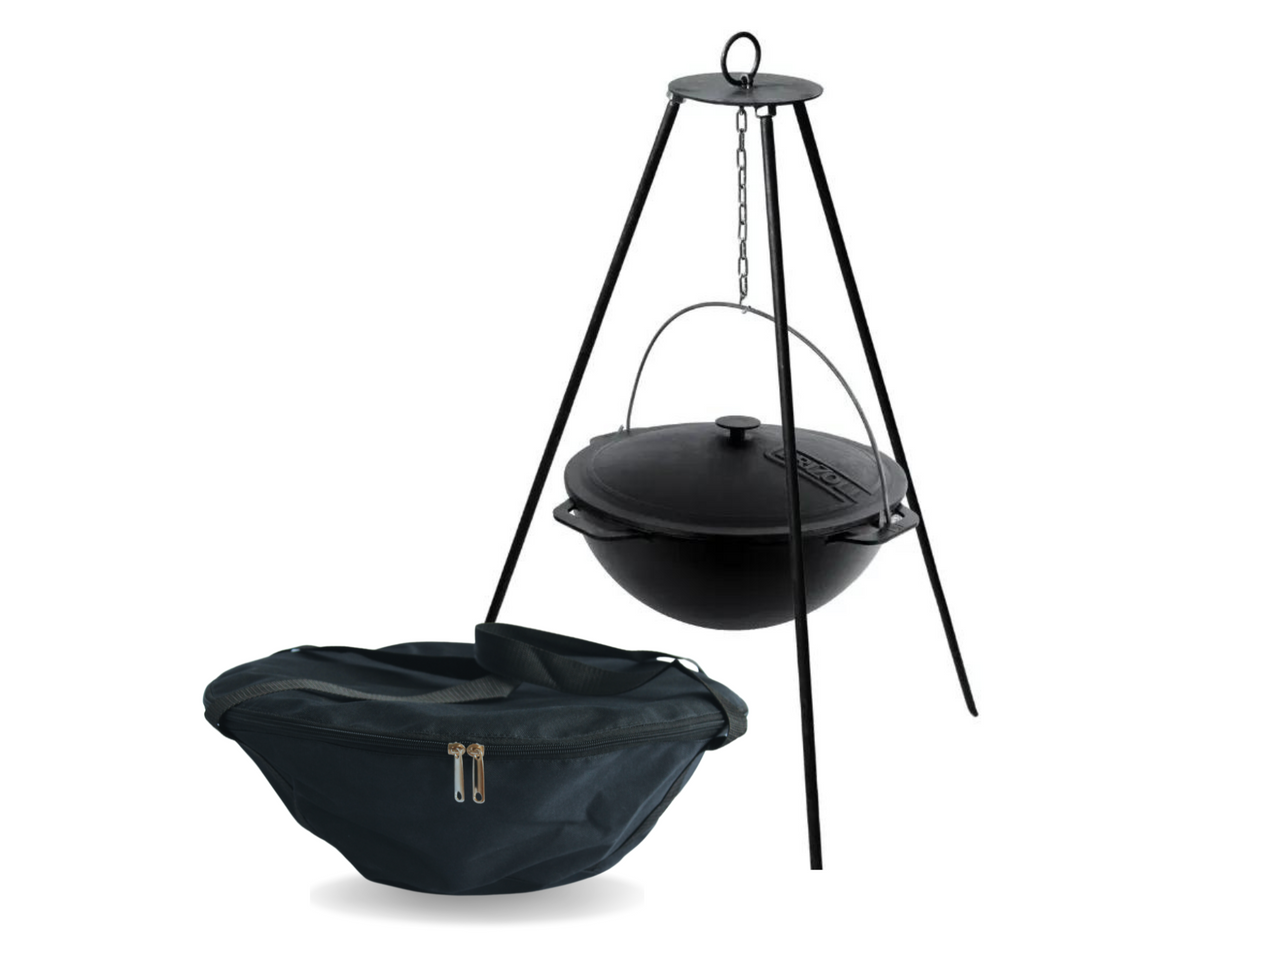 Cast iron asian cauldron 6 L WITH A LID, a tripod and a bag